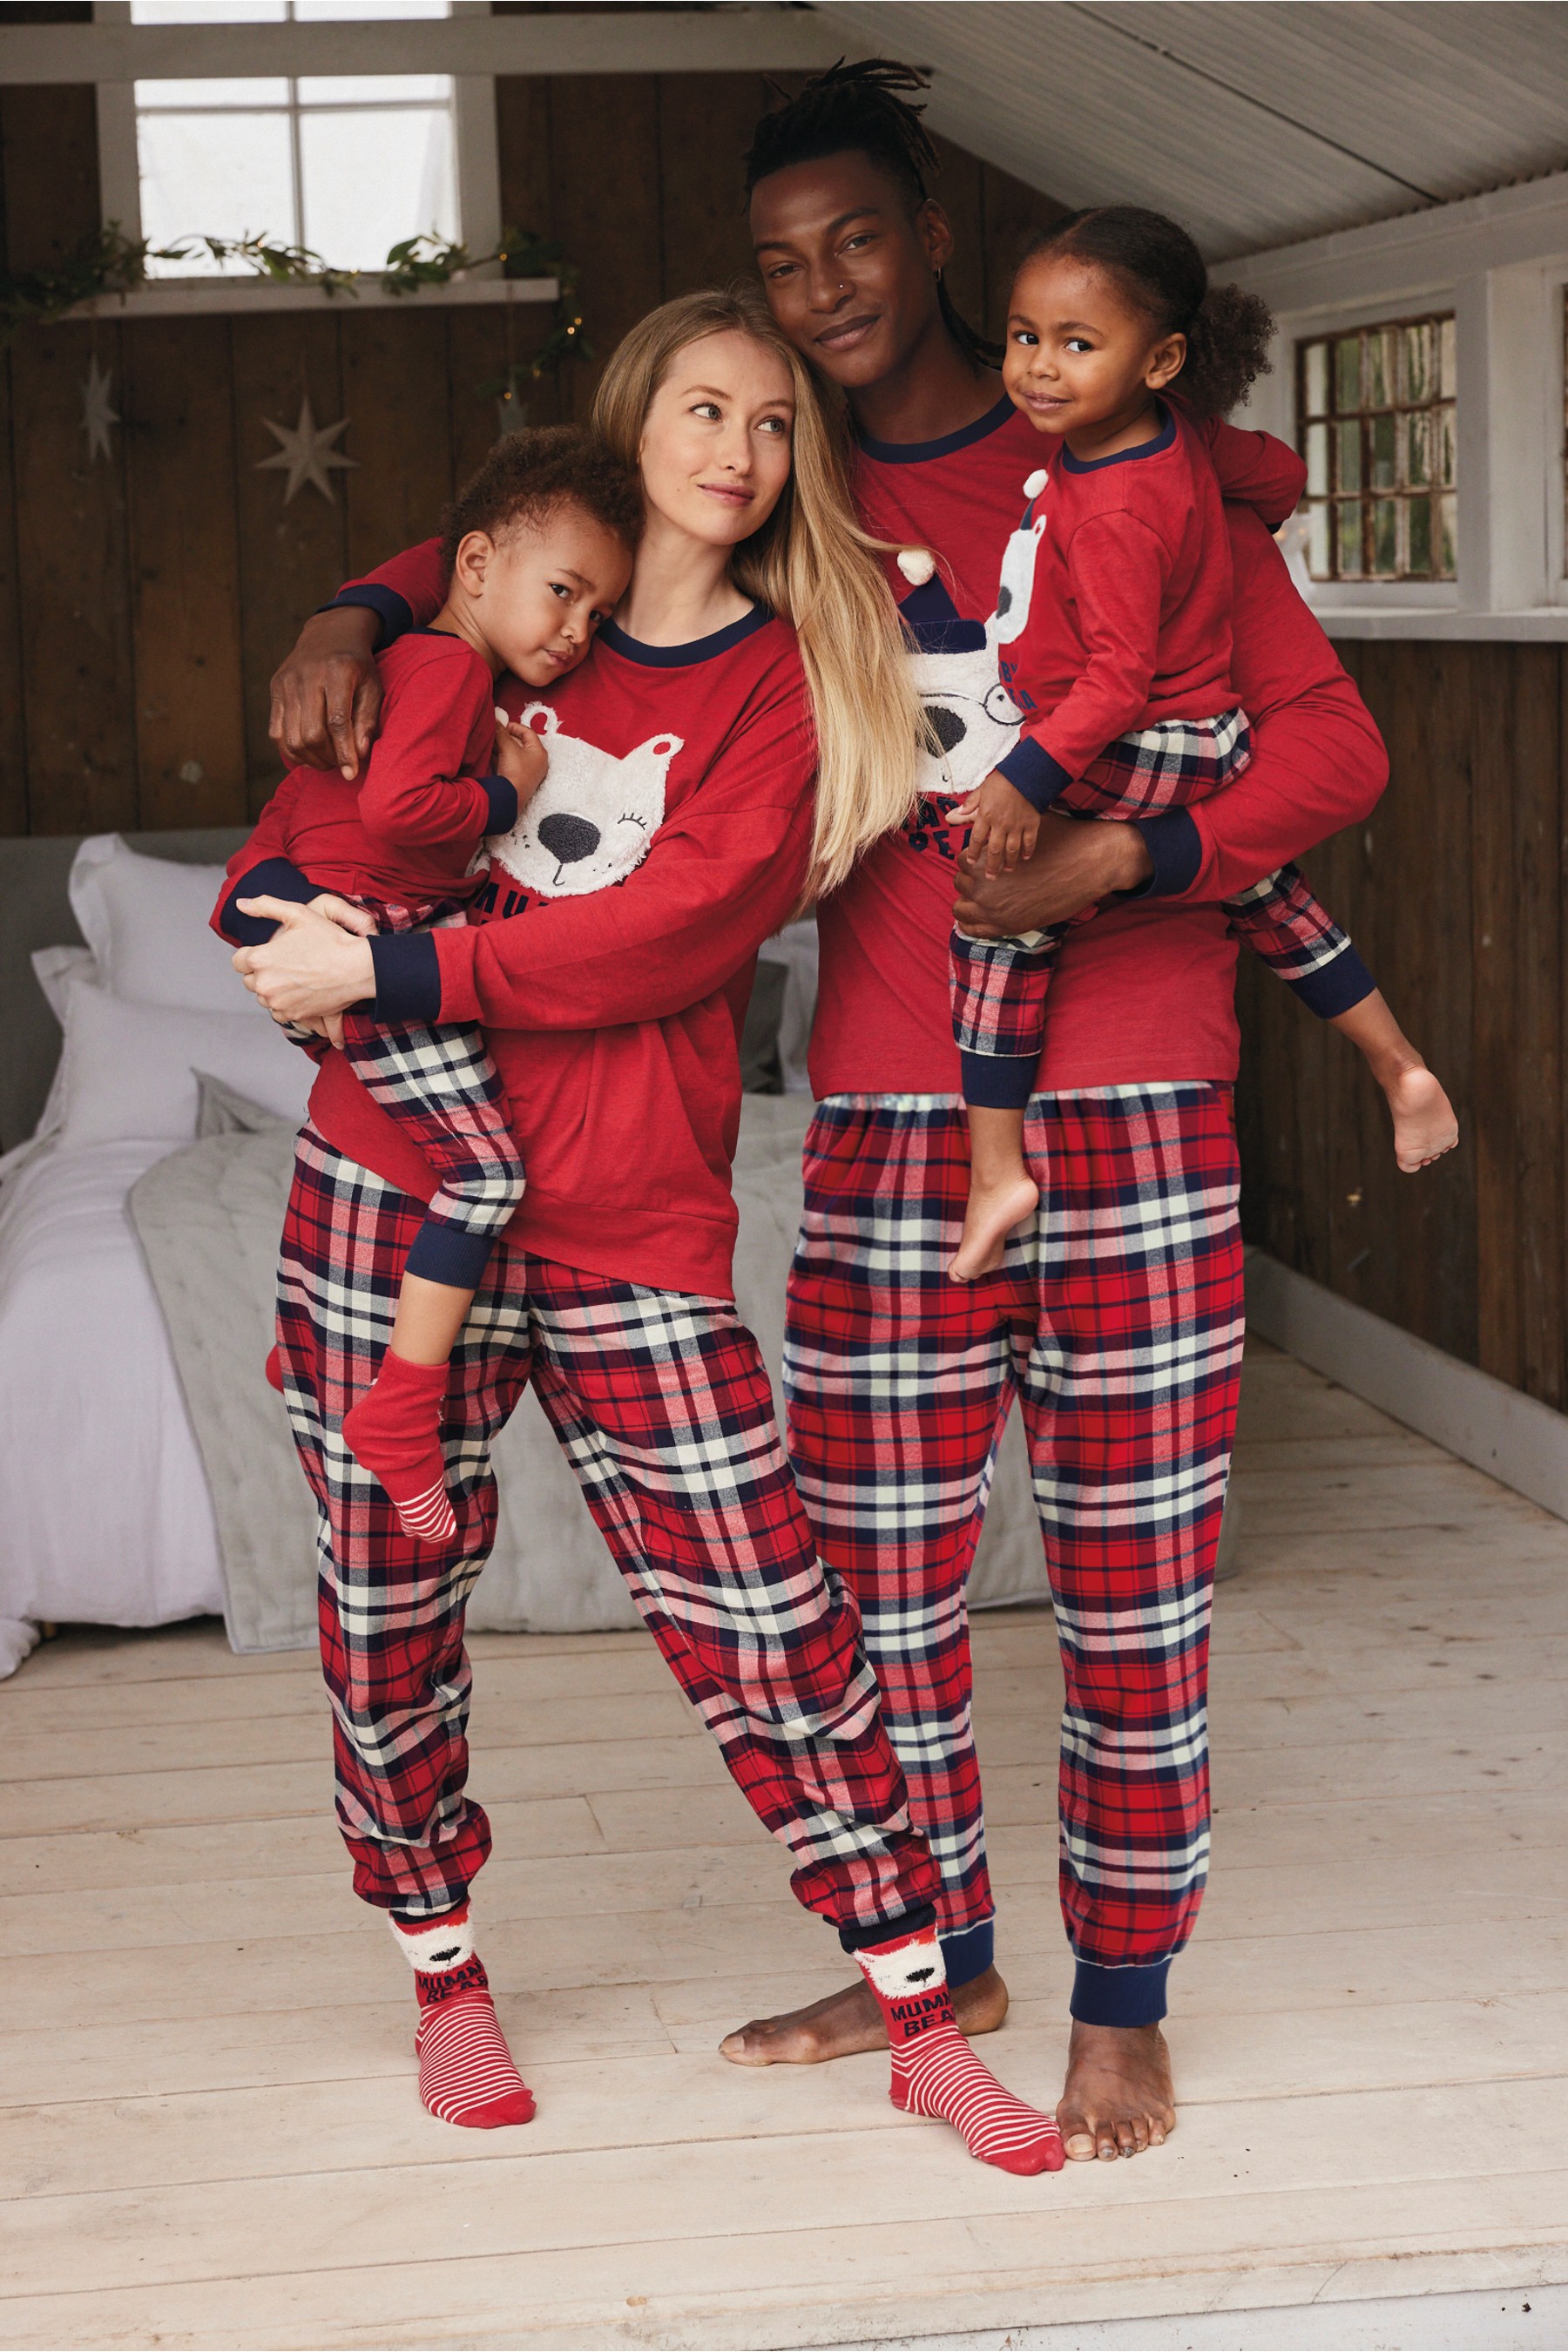 Matching Family Kids Christmas Pyjamas (9mths-16yrs)